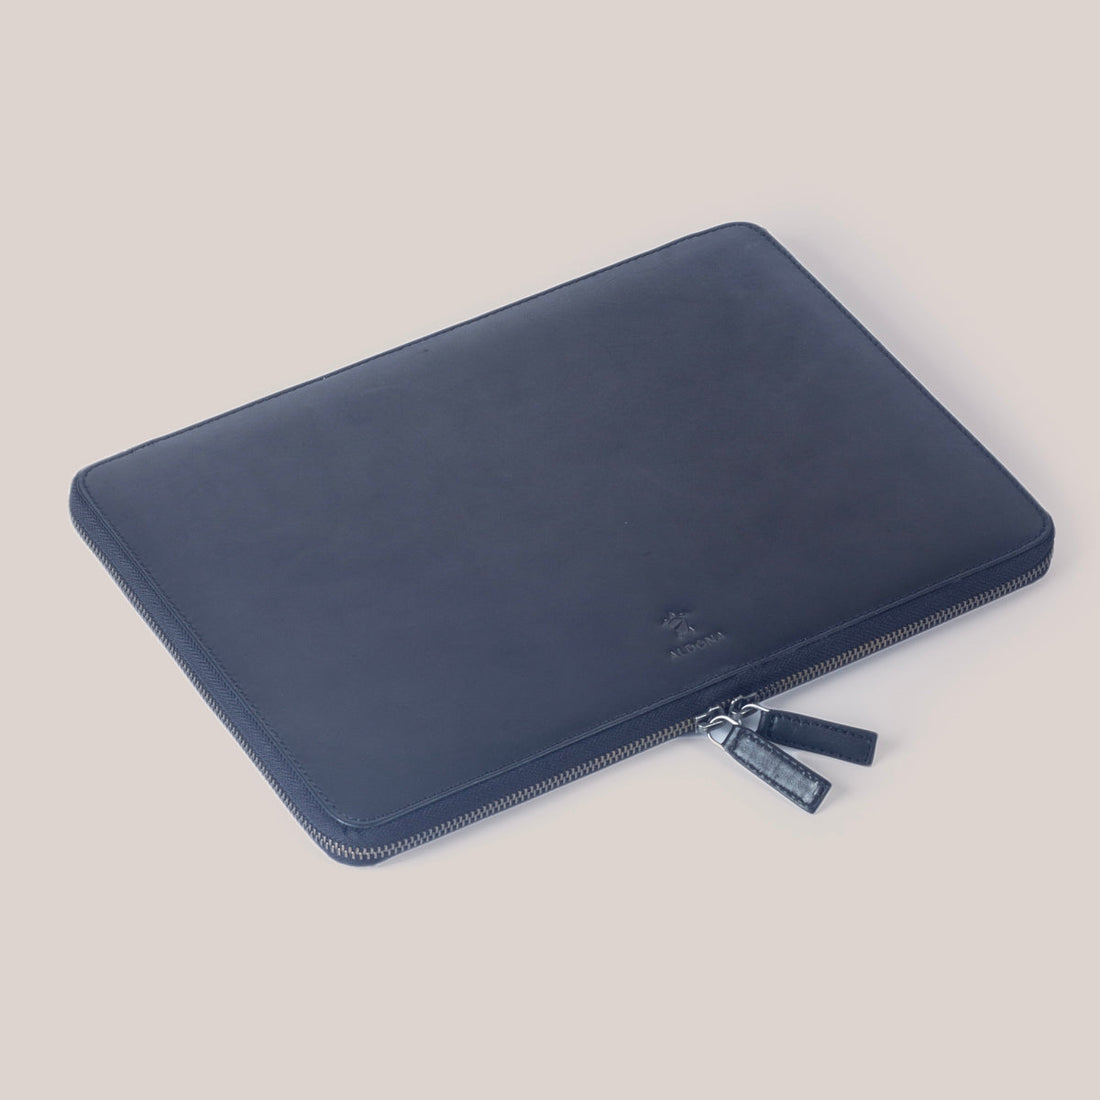 DELL XPS 13 Zippered Laptop Case - Felt and Tan Crunch